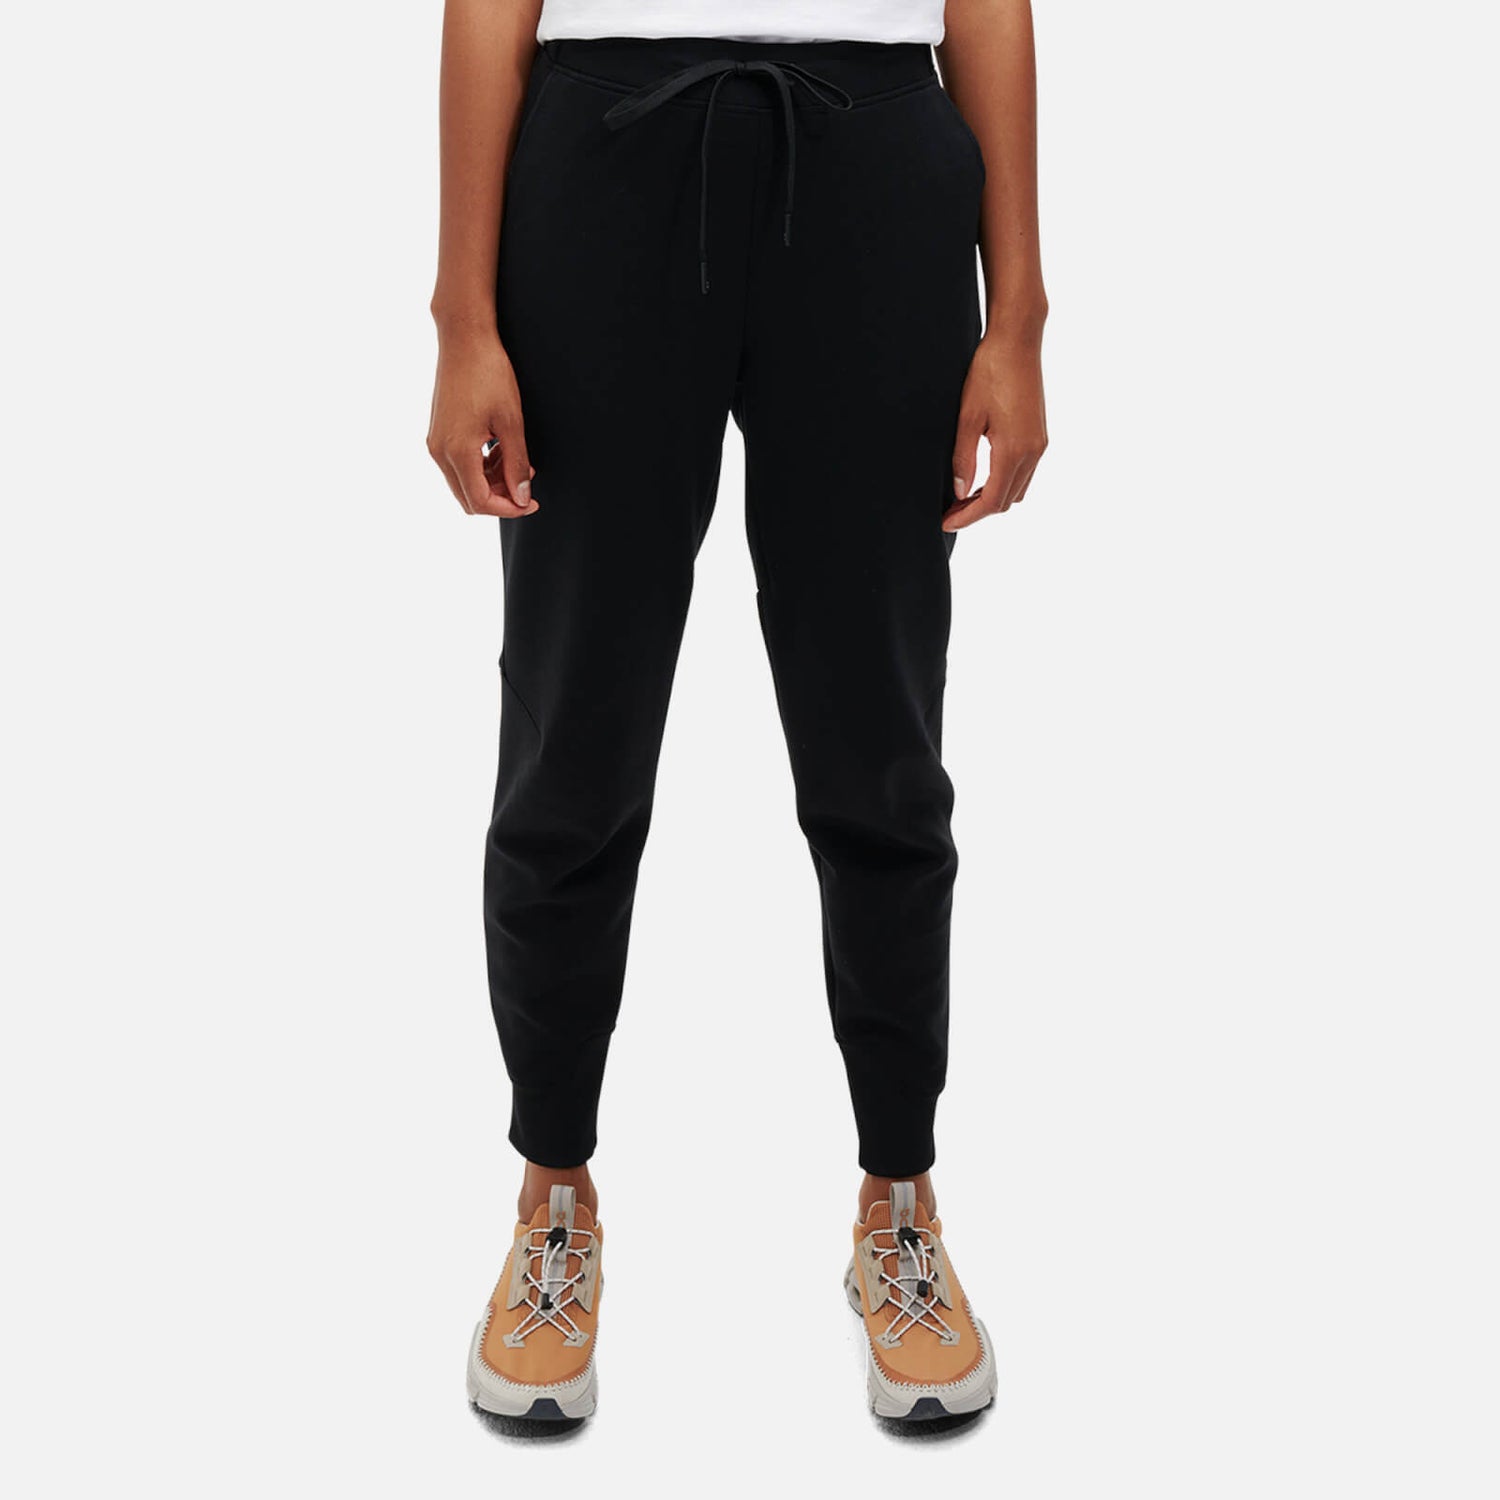 ON Women's Sweatpants - Black - S